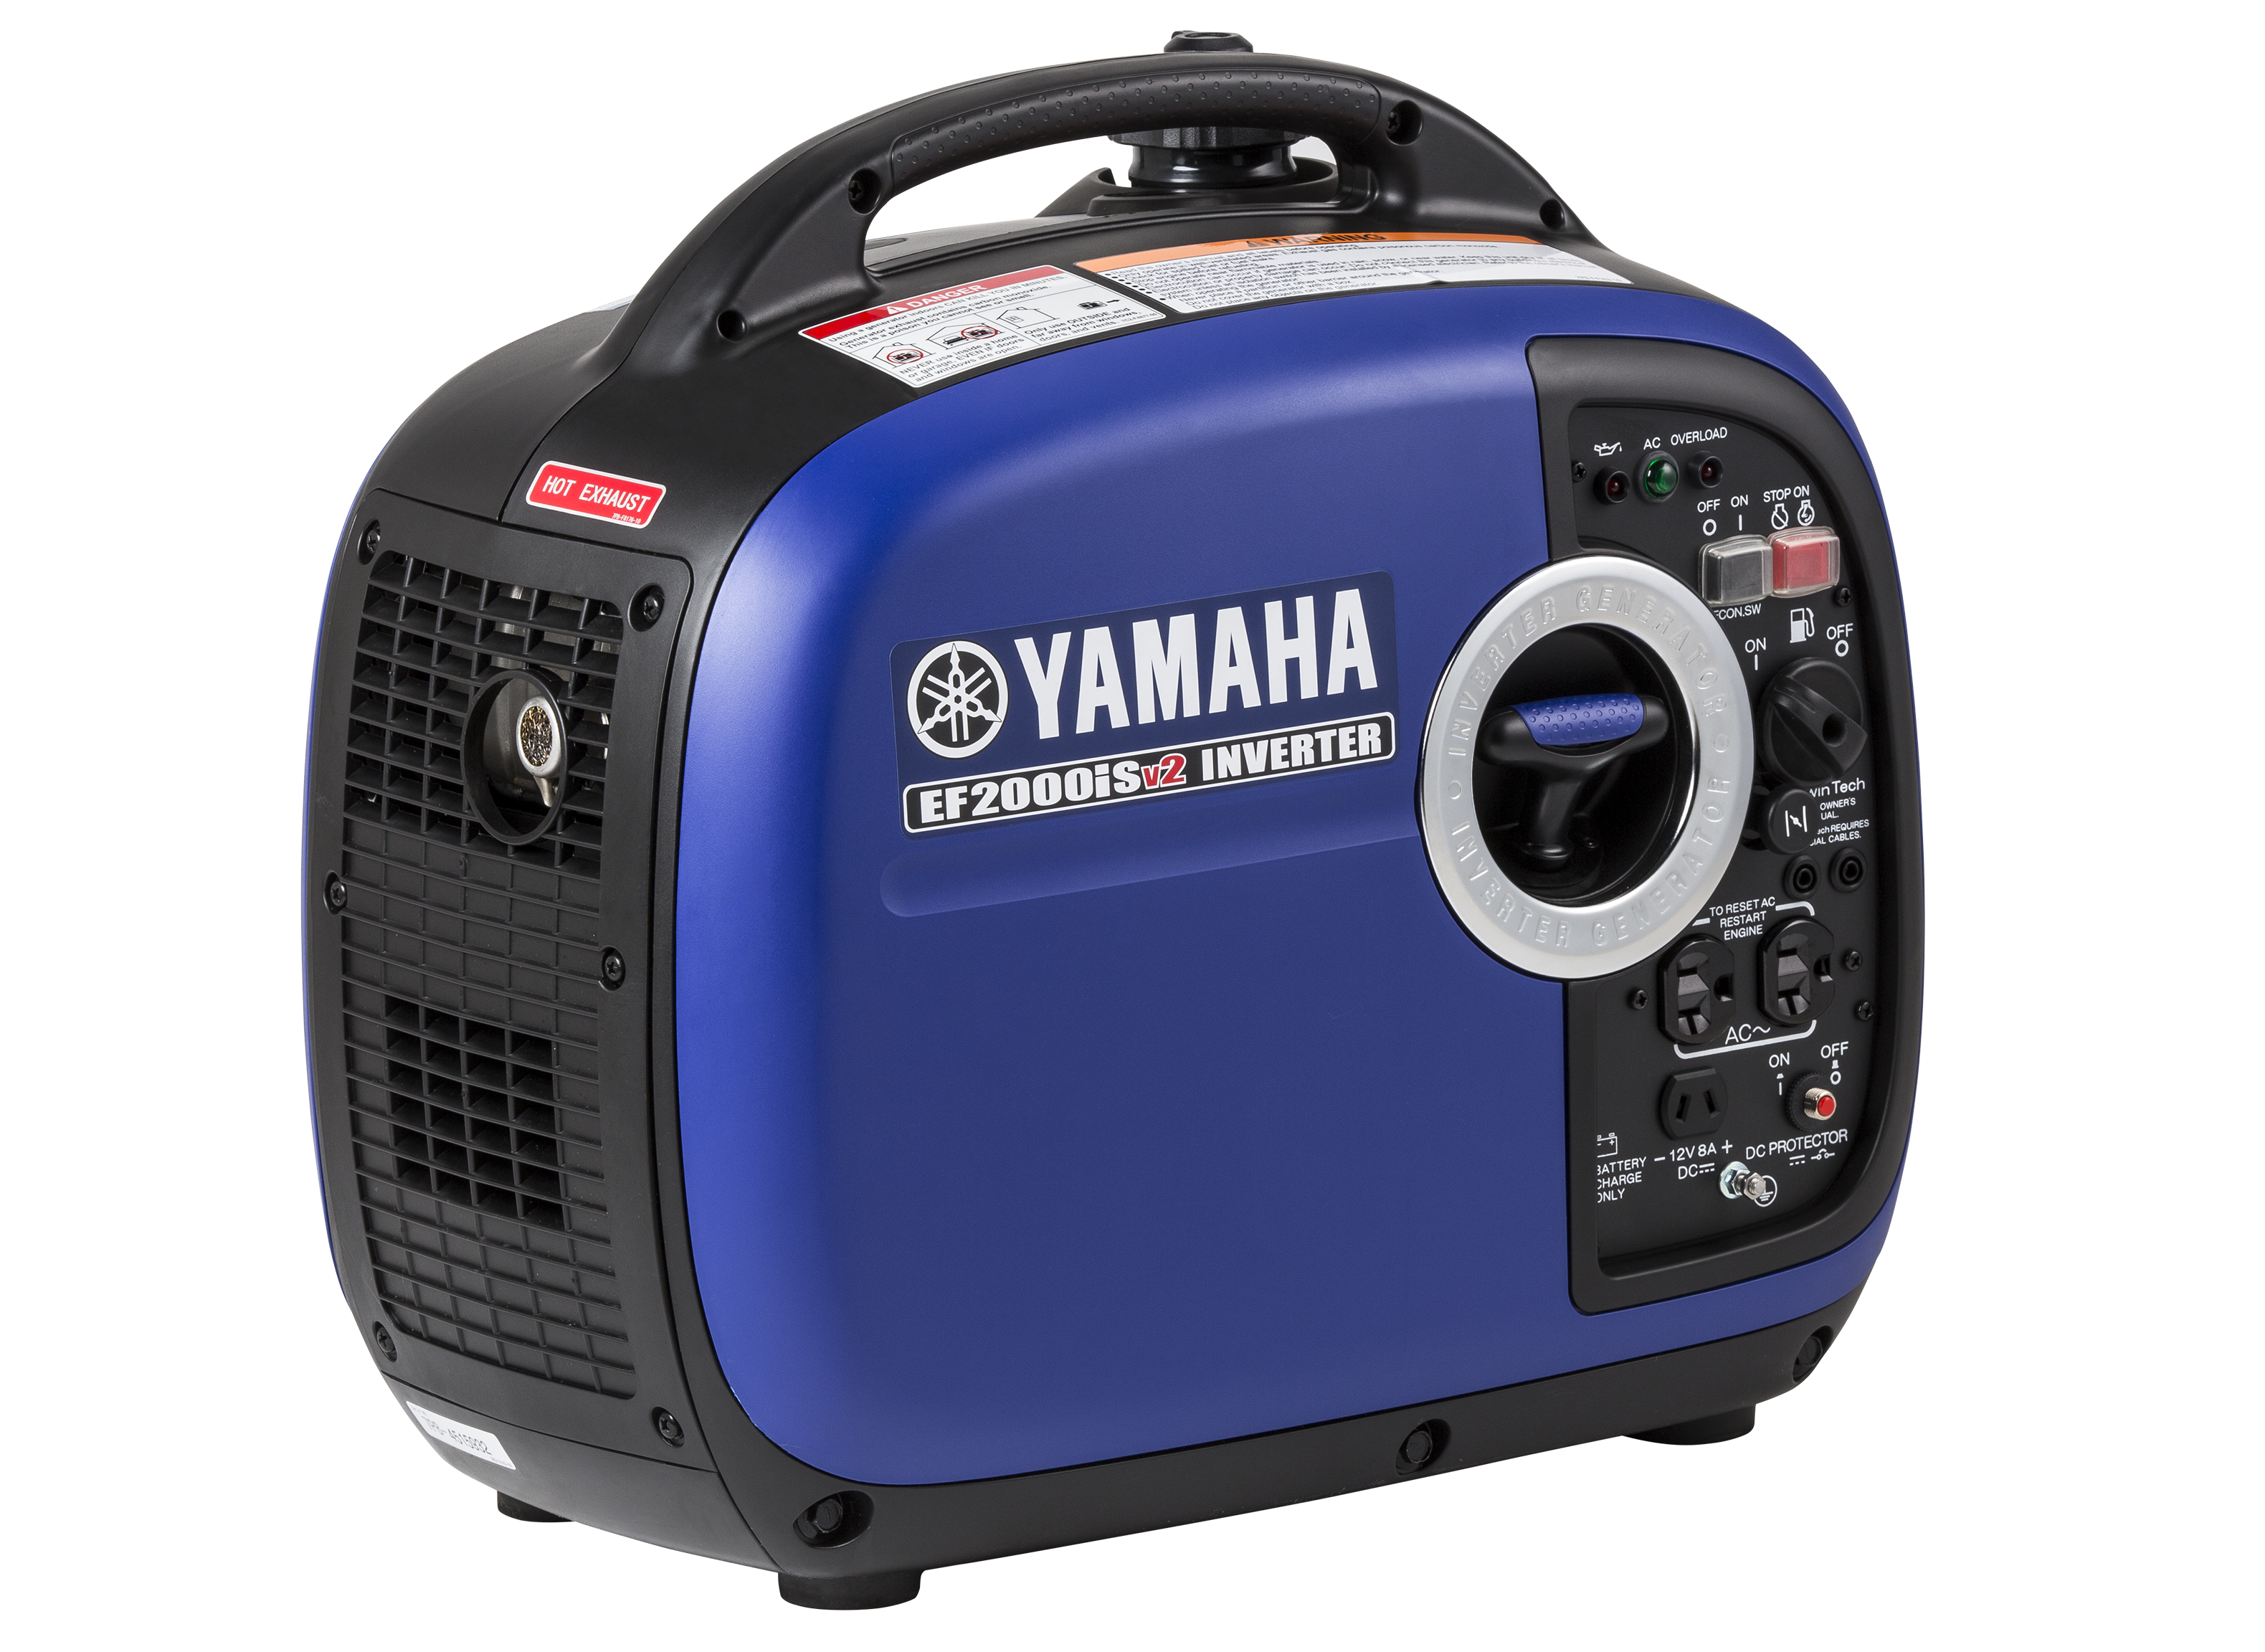 Performance And Durability Of Yamaha Small Generator